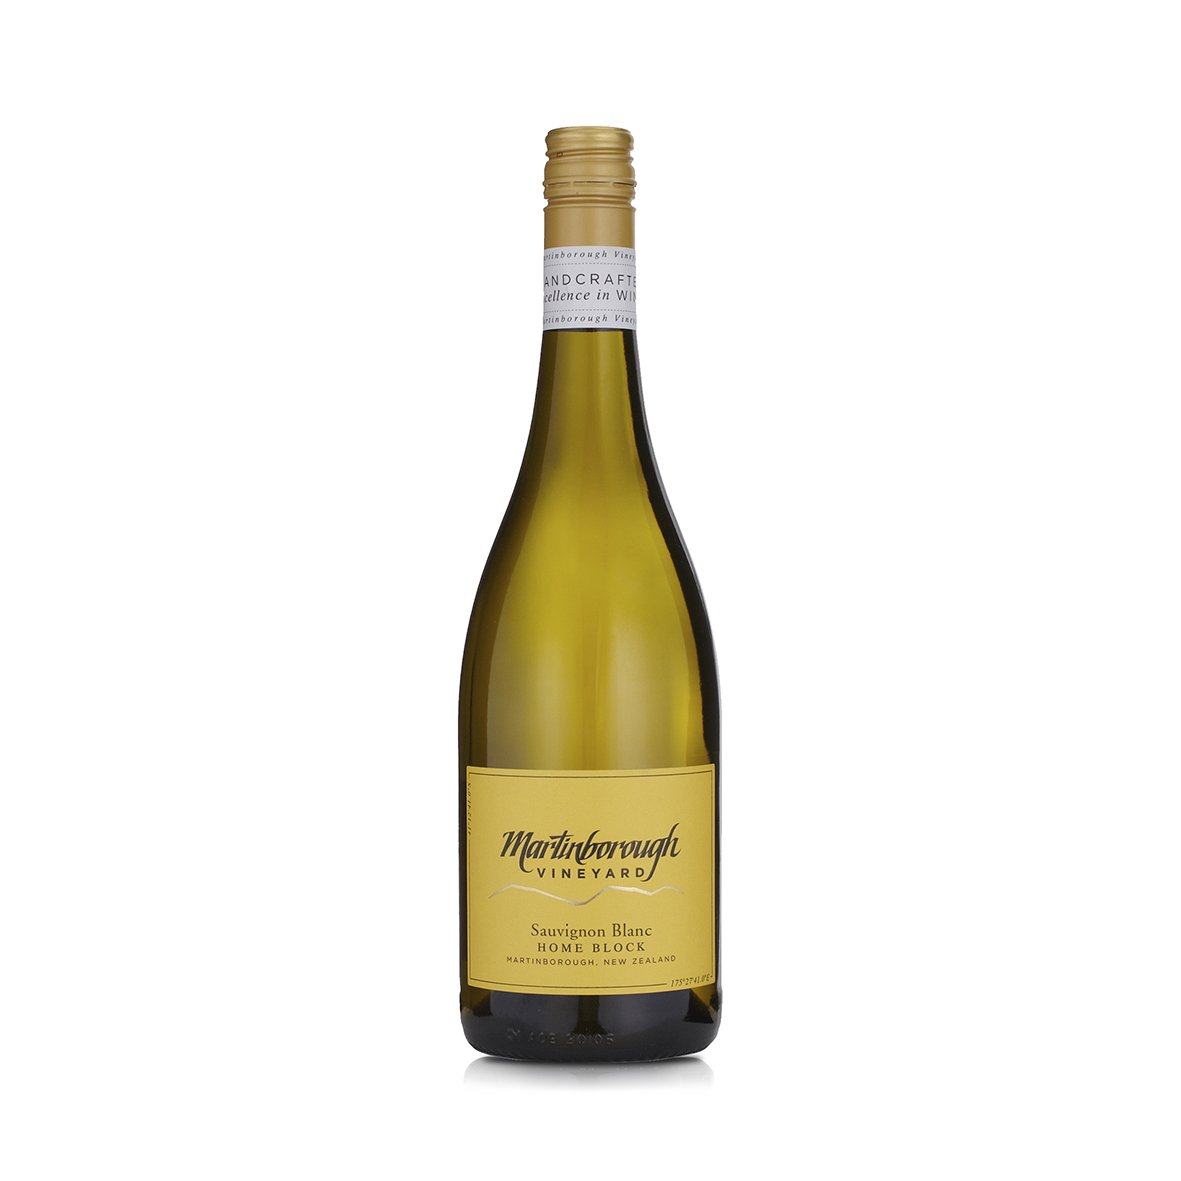 Martinborough Vineyard Home Block Sauvignon Blanc 2017 6 Bottles